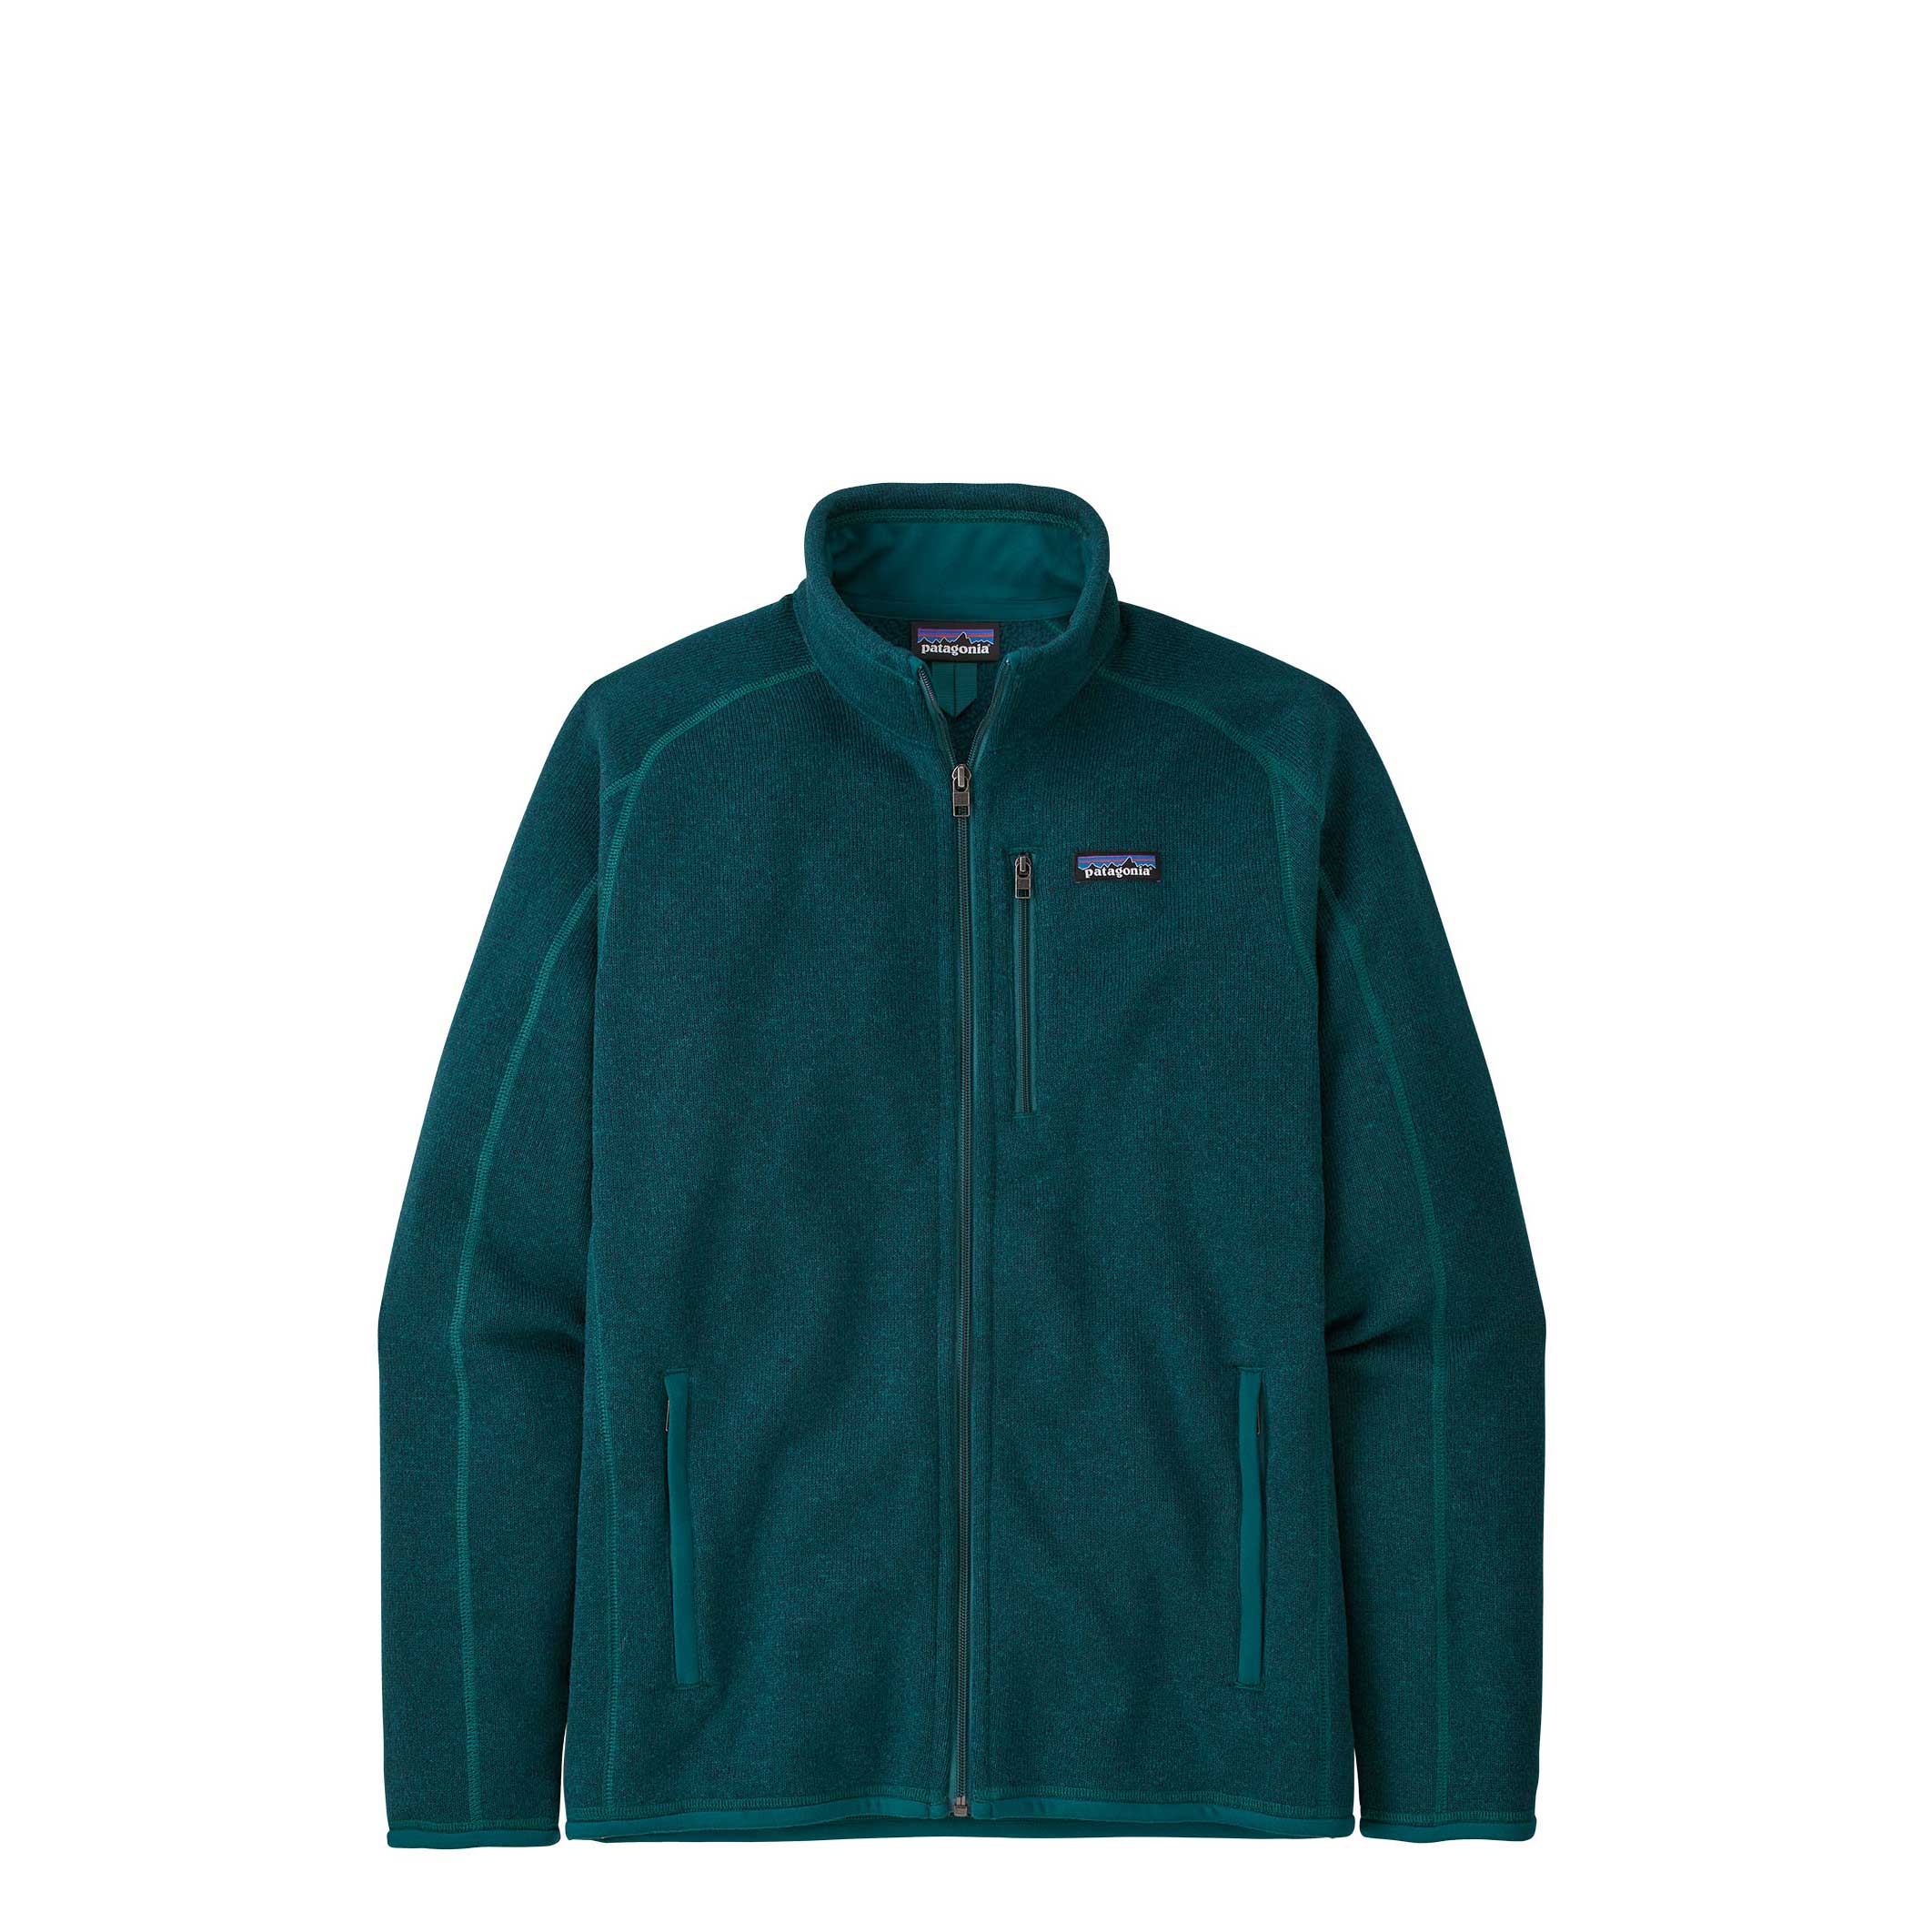 Patagonia Men's Nouveau Green Performance Better Sweater Jacket